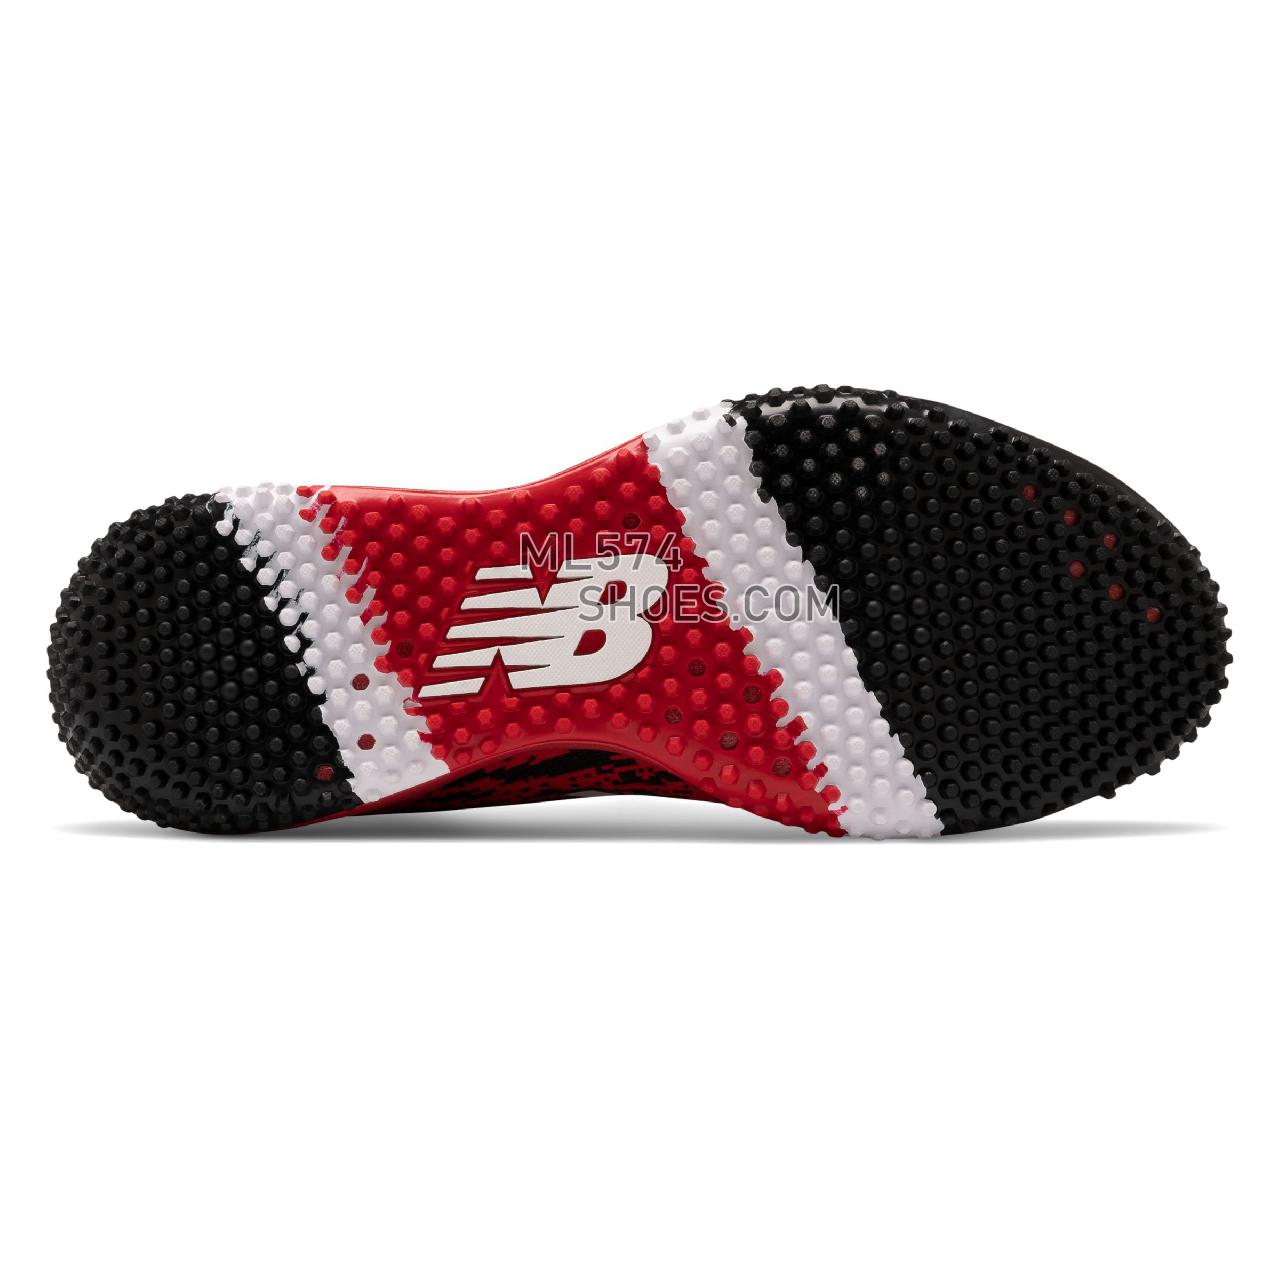 New Balance 4040v5 Turf - Men's Baseball Turf - Black with Red - T4040BR5